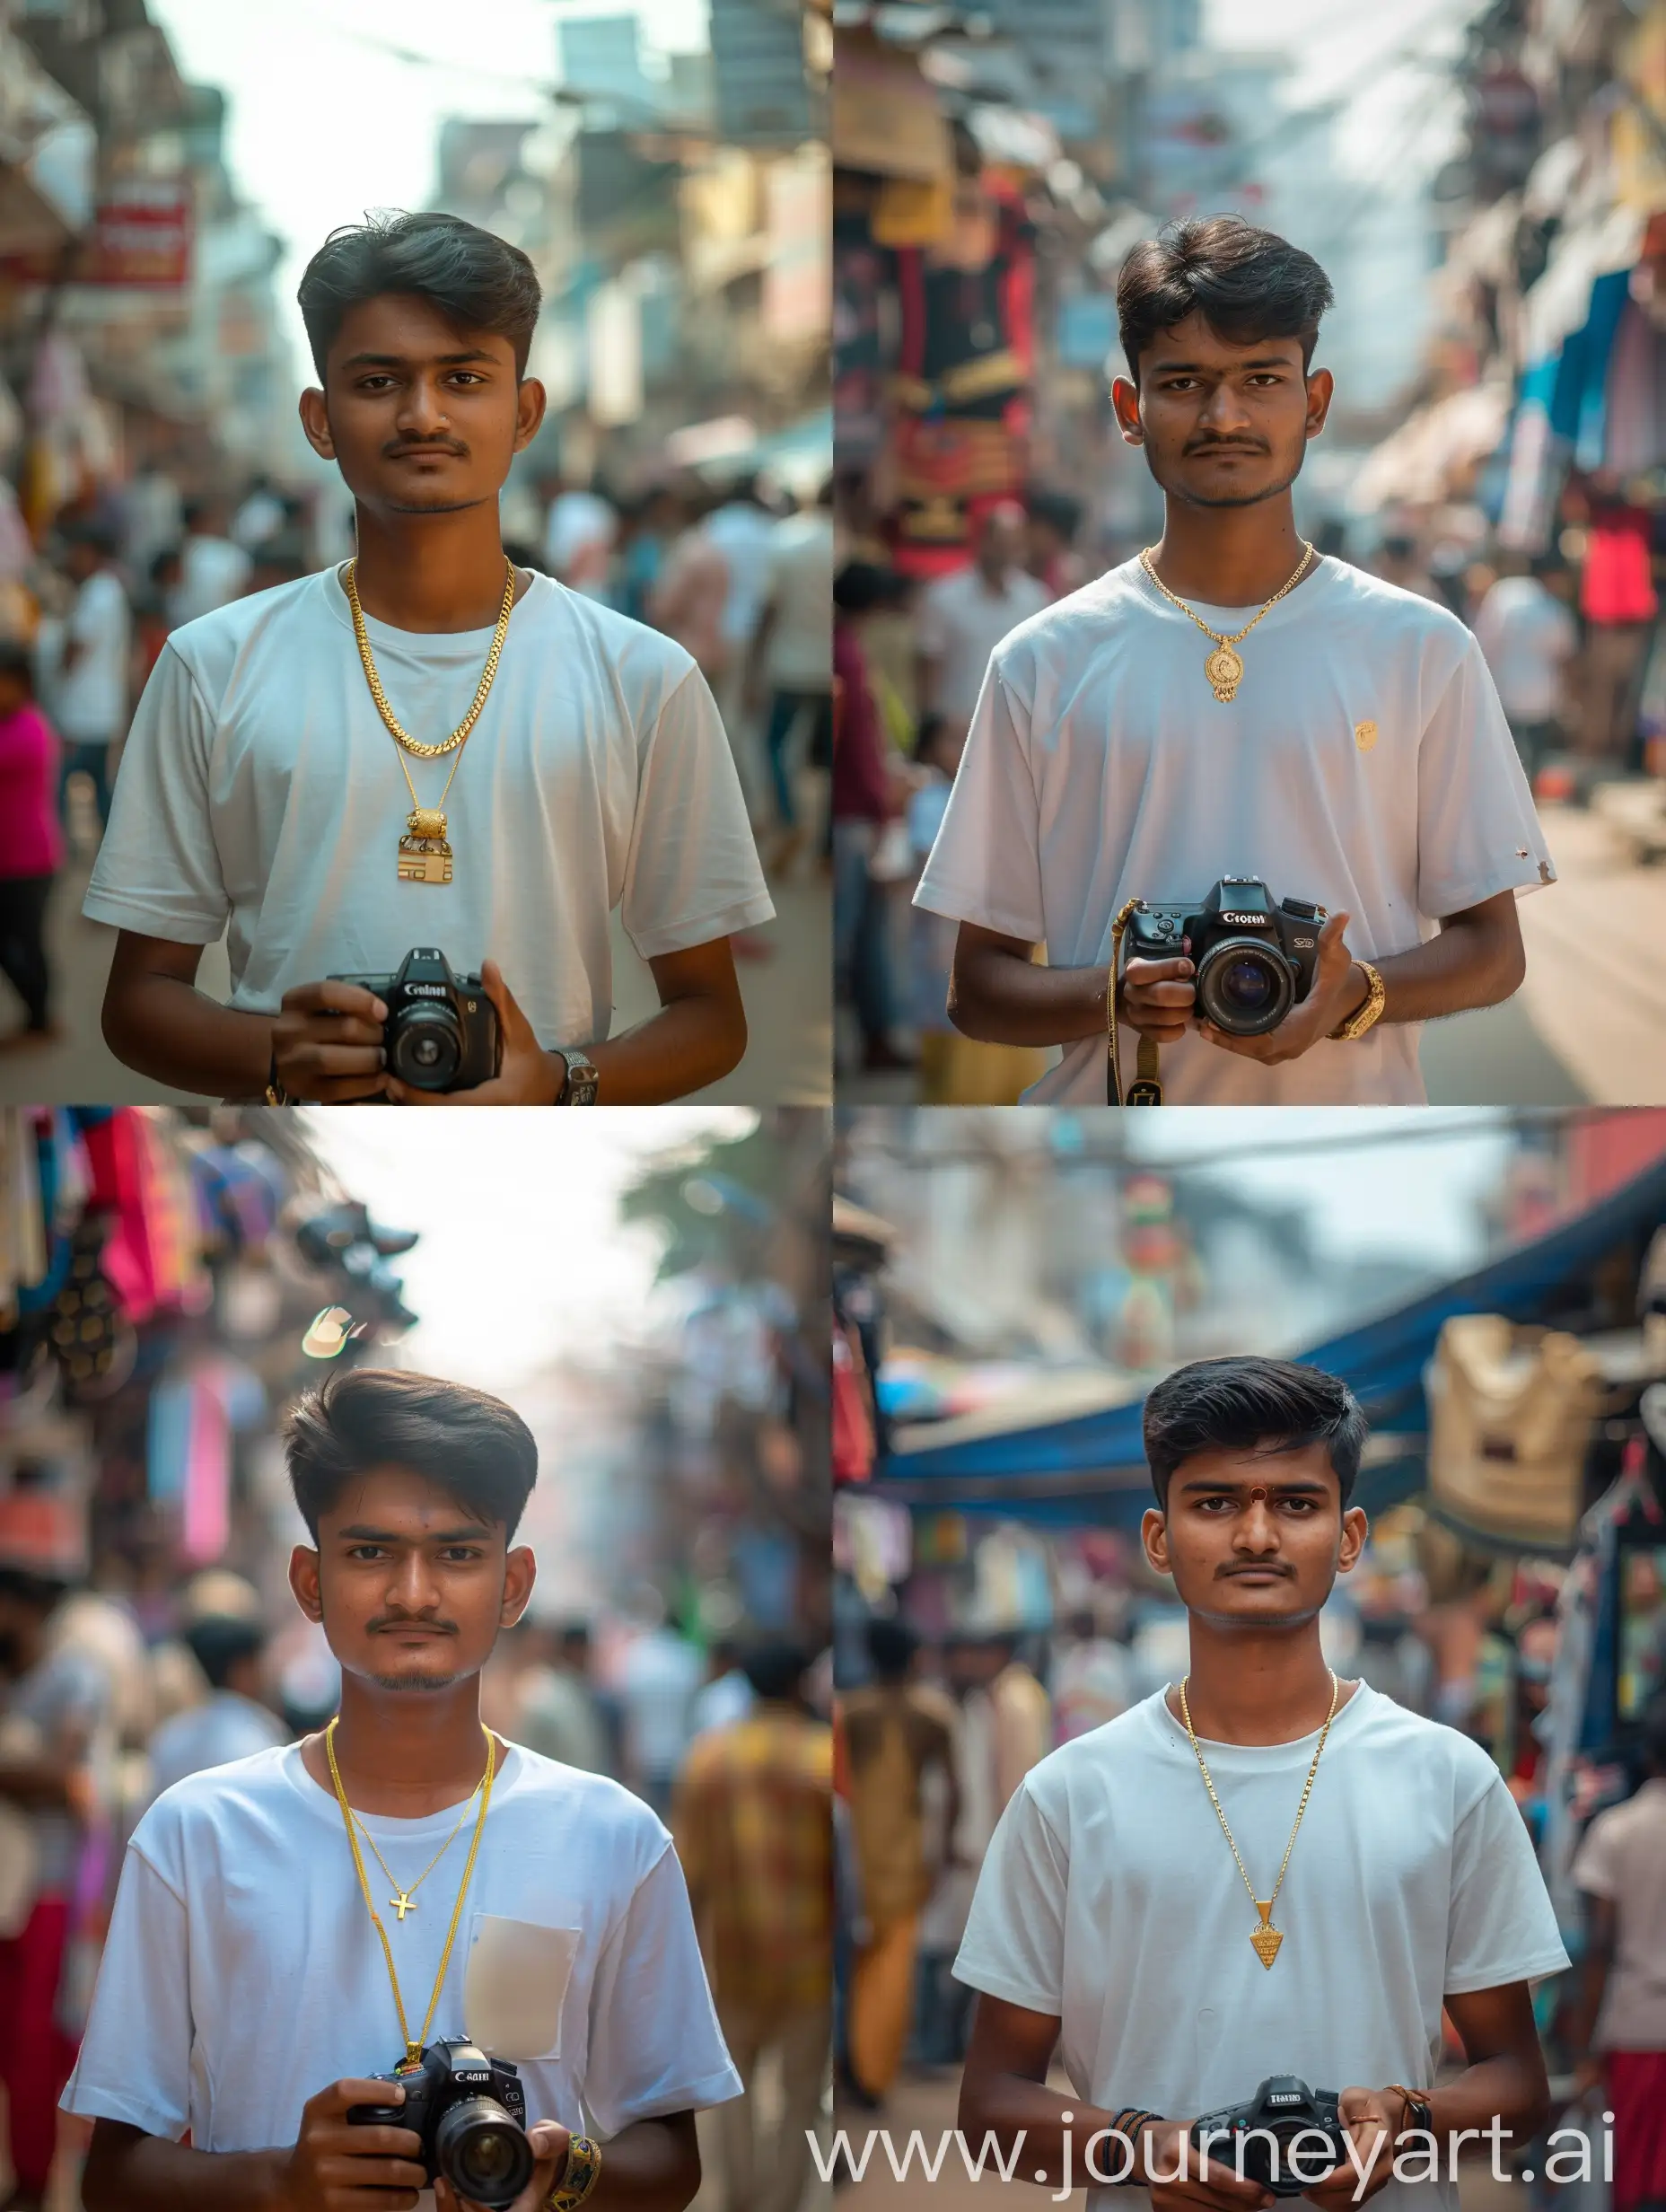 Youthful-Indian-Photographer-Capturing-Street-Life